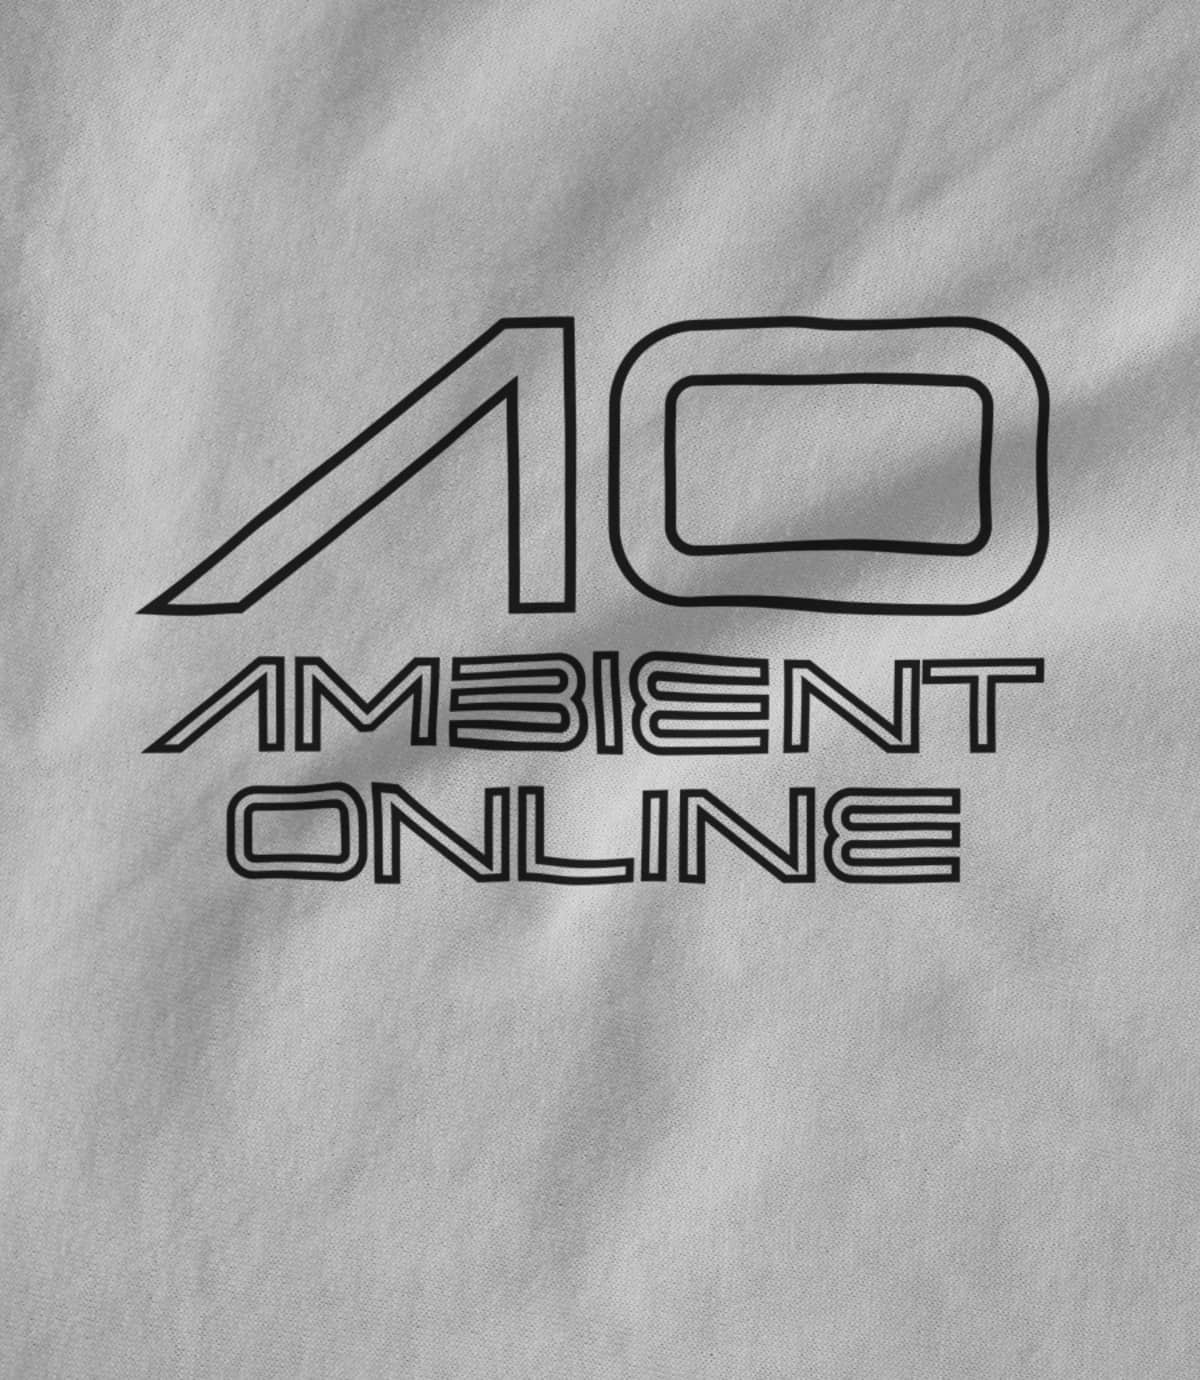 Ambient online ambient online v2 lvqoiu